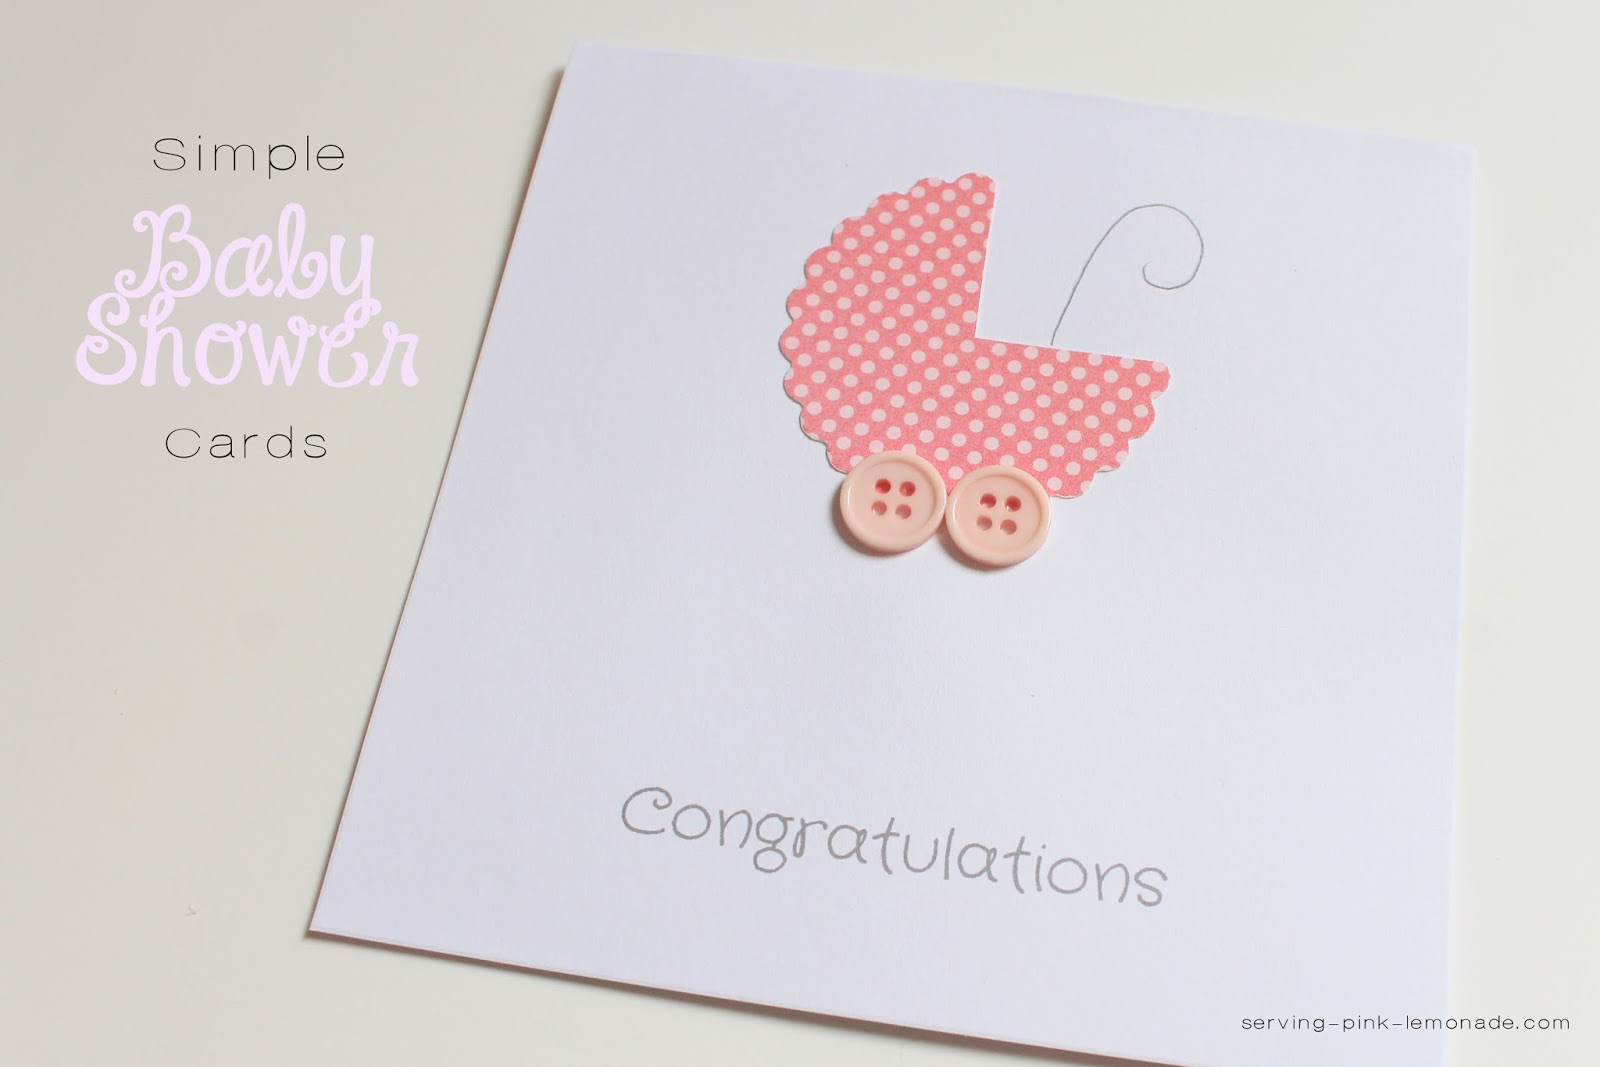 Full Size of Baby Shower:graceful Baby Shower Cards Image Designs Serving Pink Lemonade Simple Baby Shower Cards Simple Baby Shower Cards